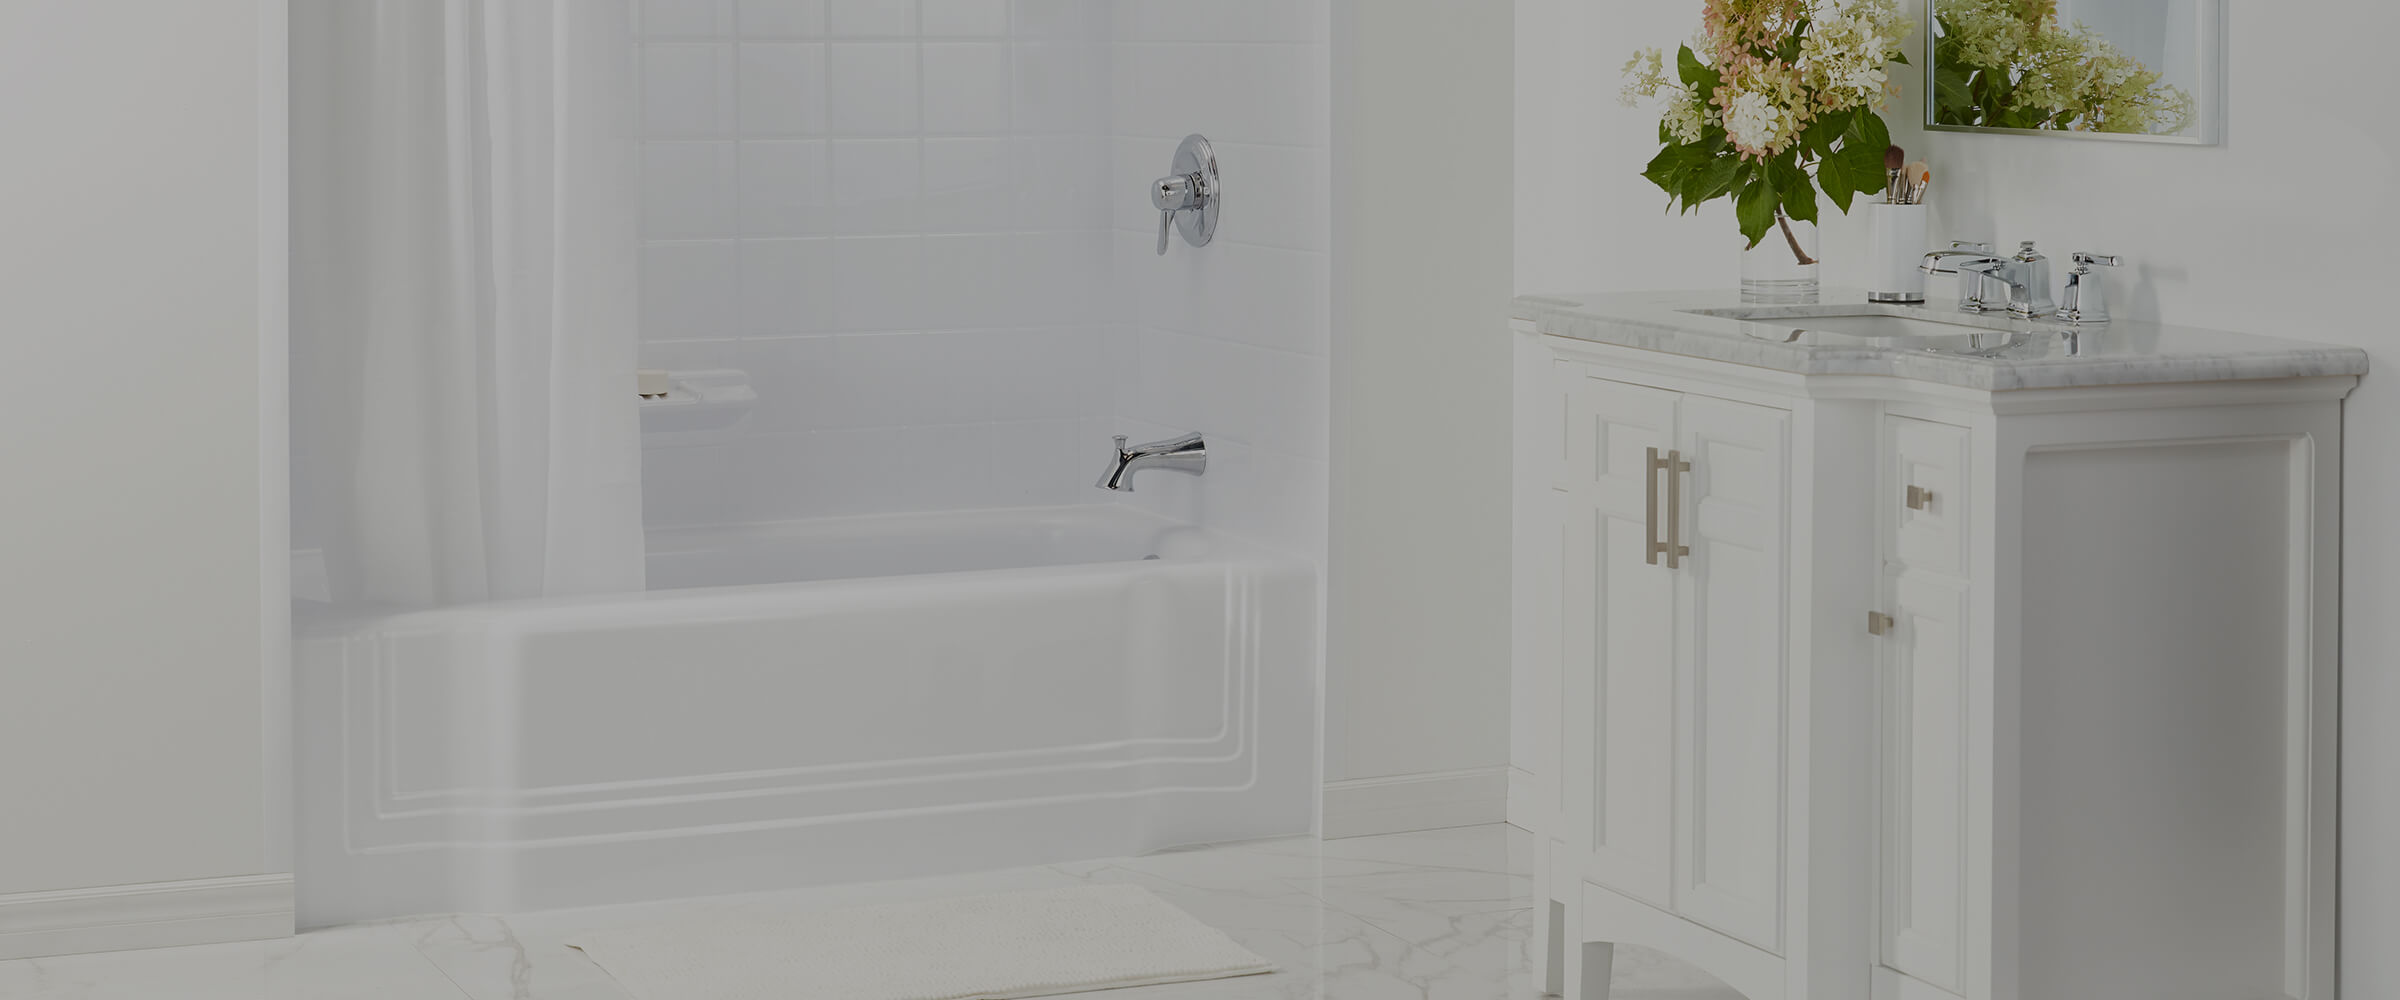 Bathtub Replacement And Remodel Bath, Bathtub Retrofit Shower